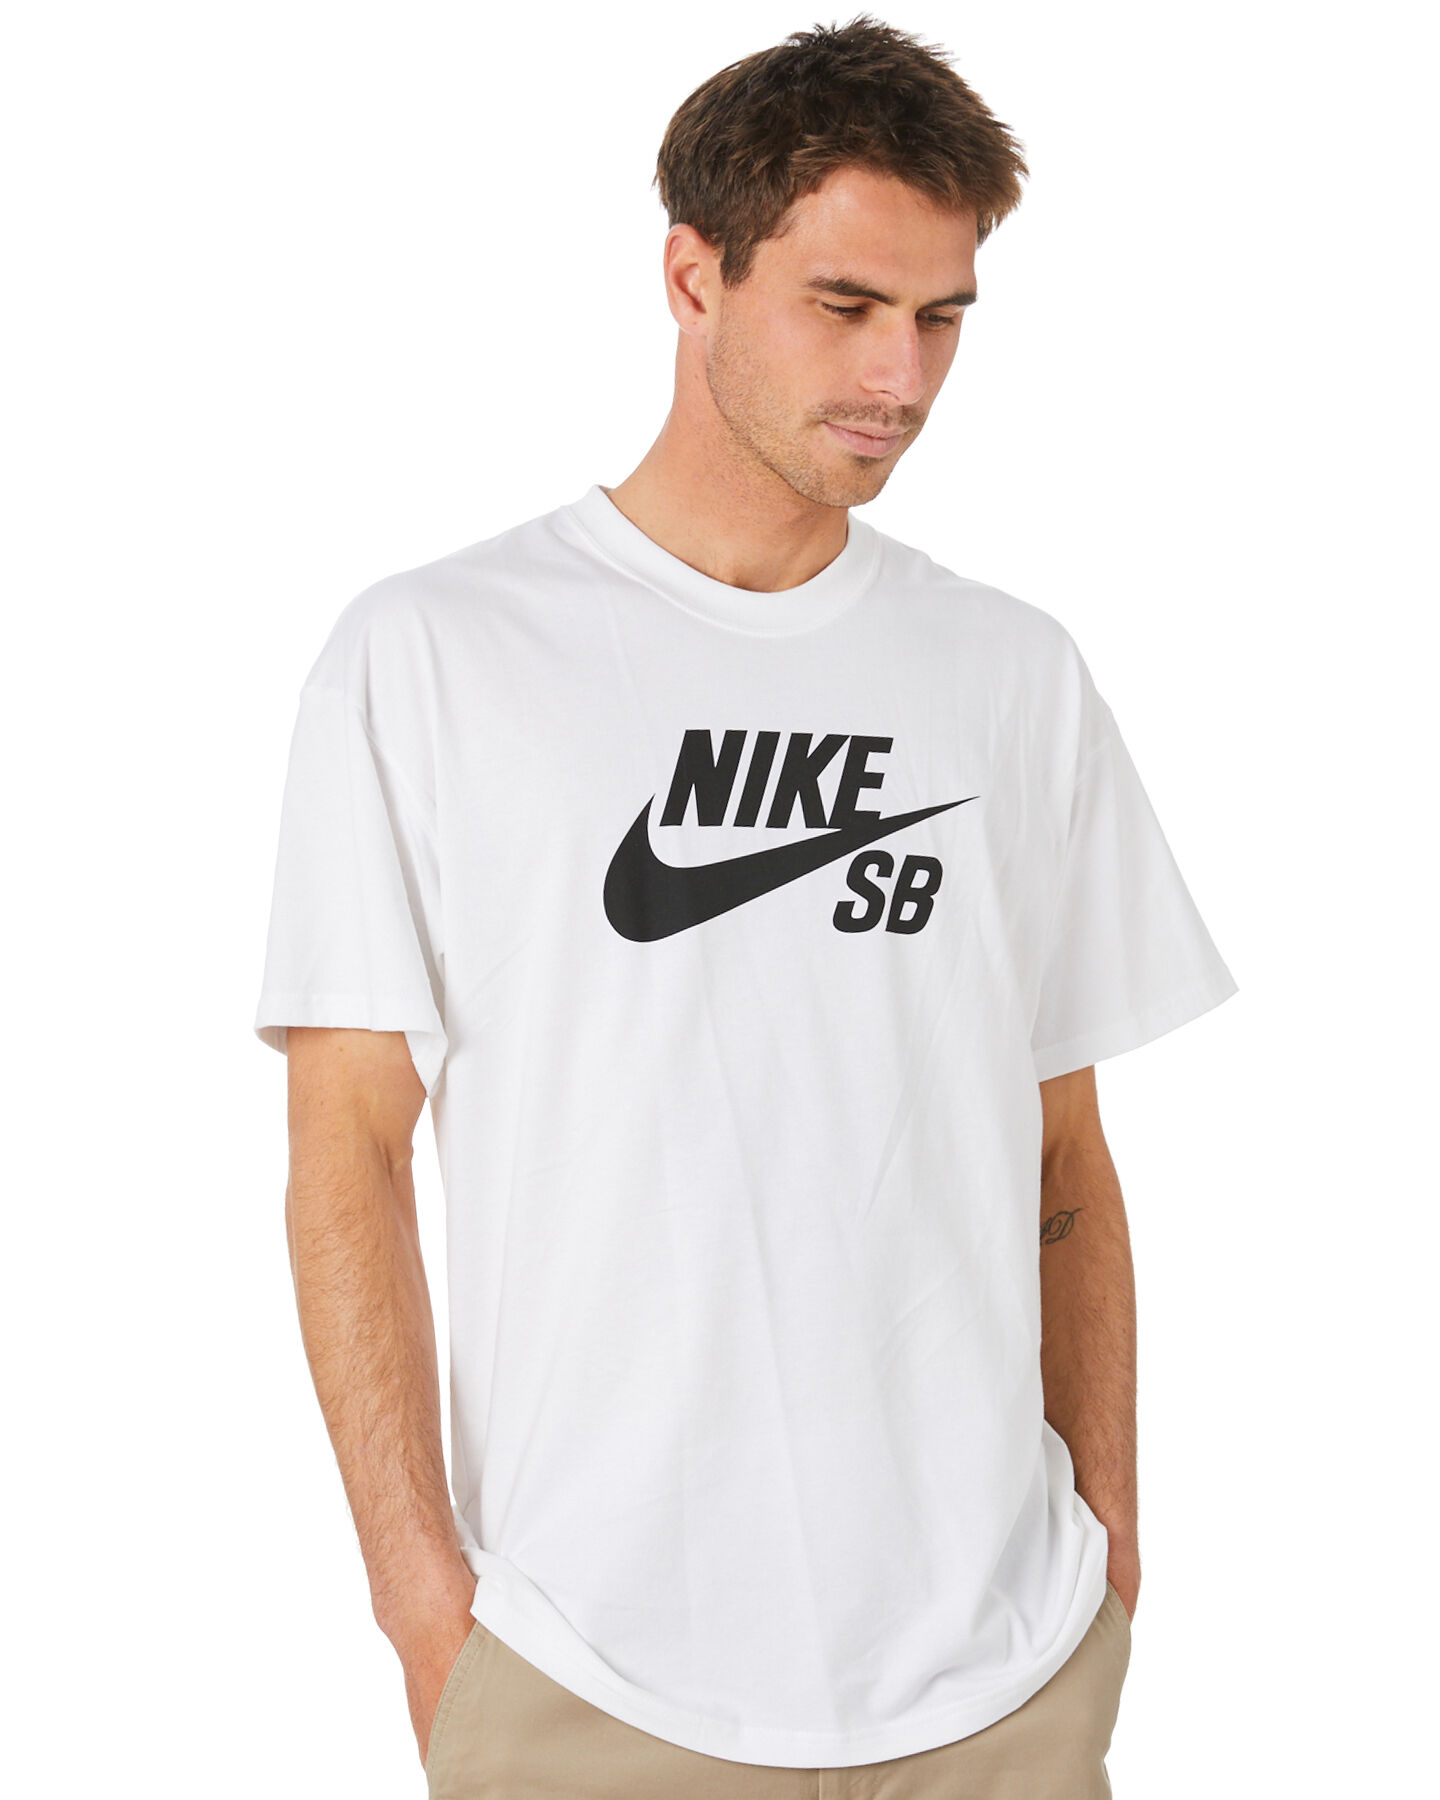 white nike sb shirt